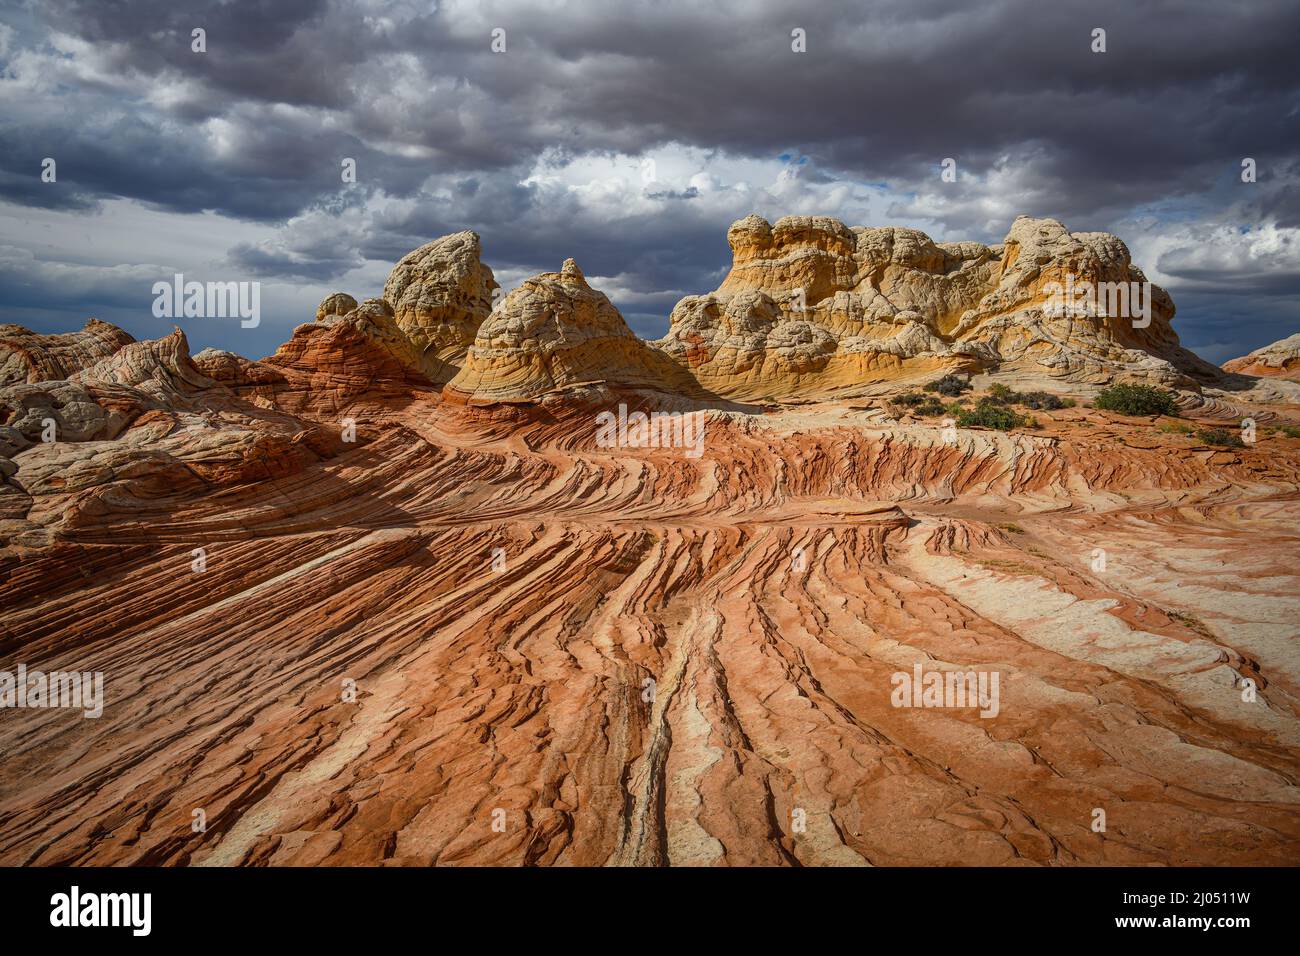 Sandstone formations at White Pocket, Vermillion Cliffs National Monument, Arizona. Stock Photo